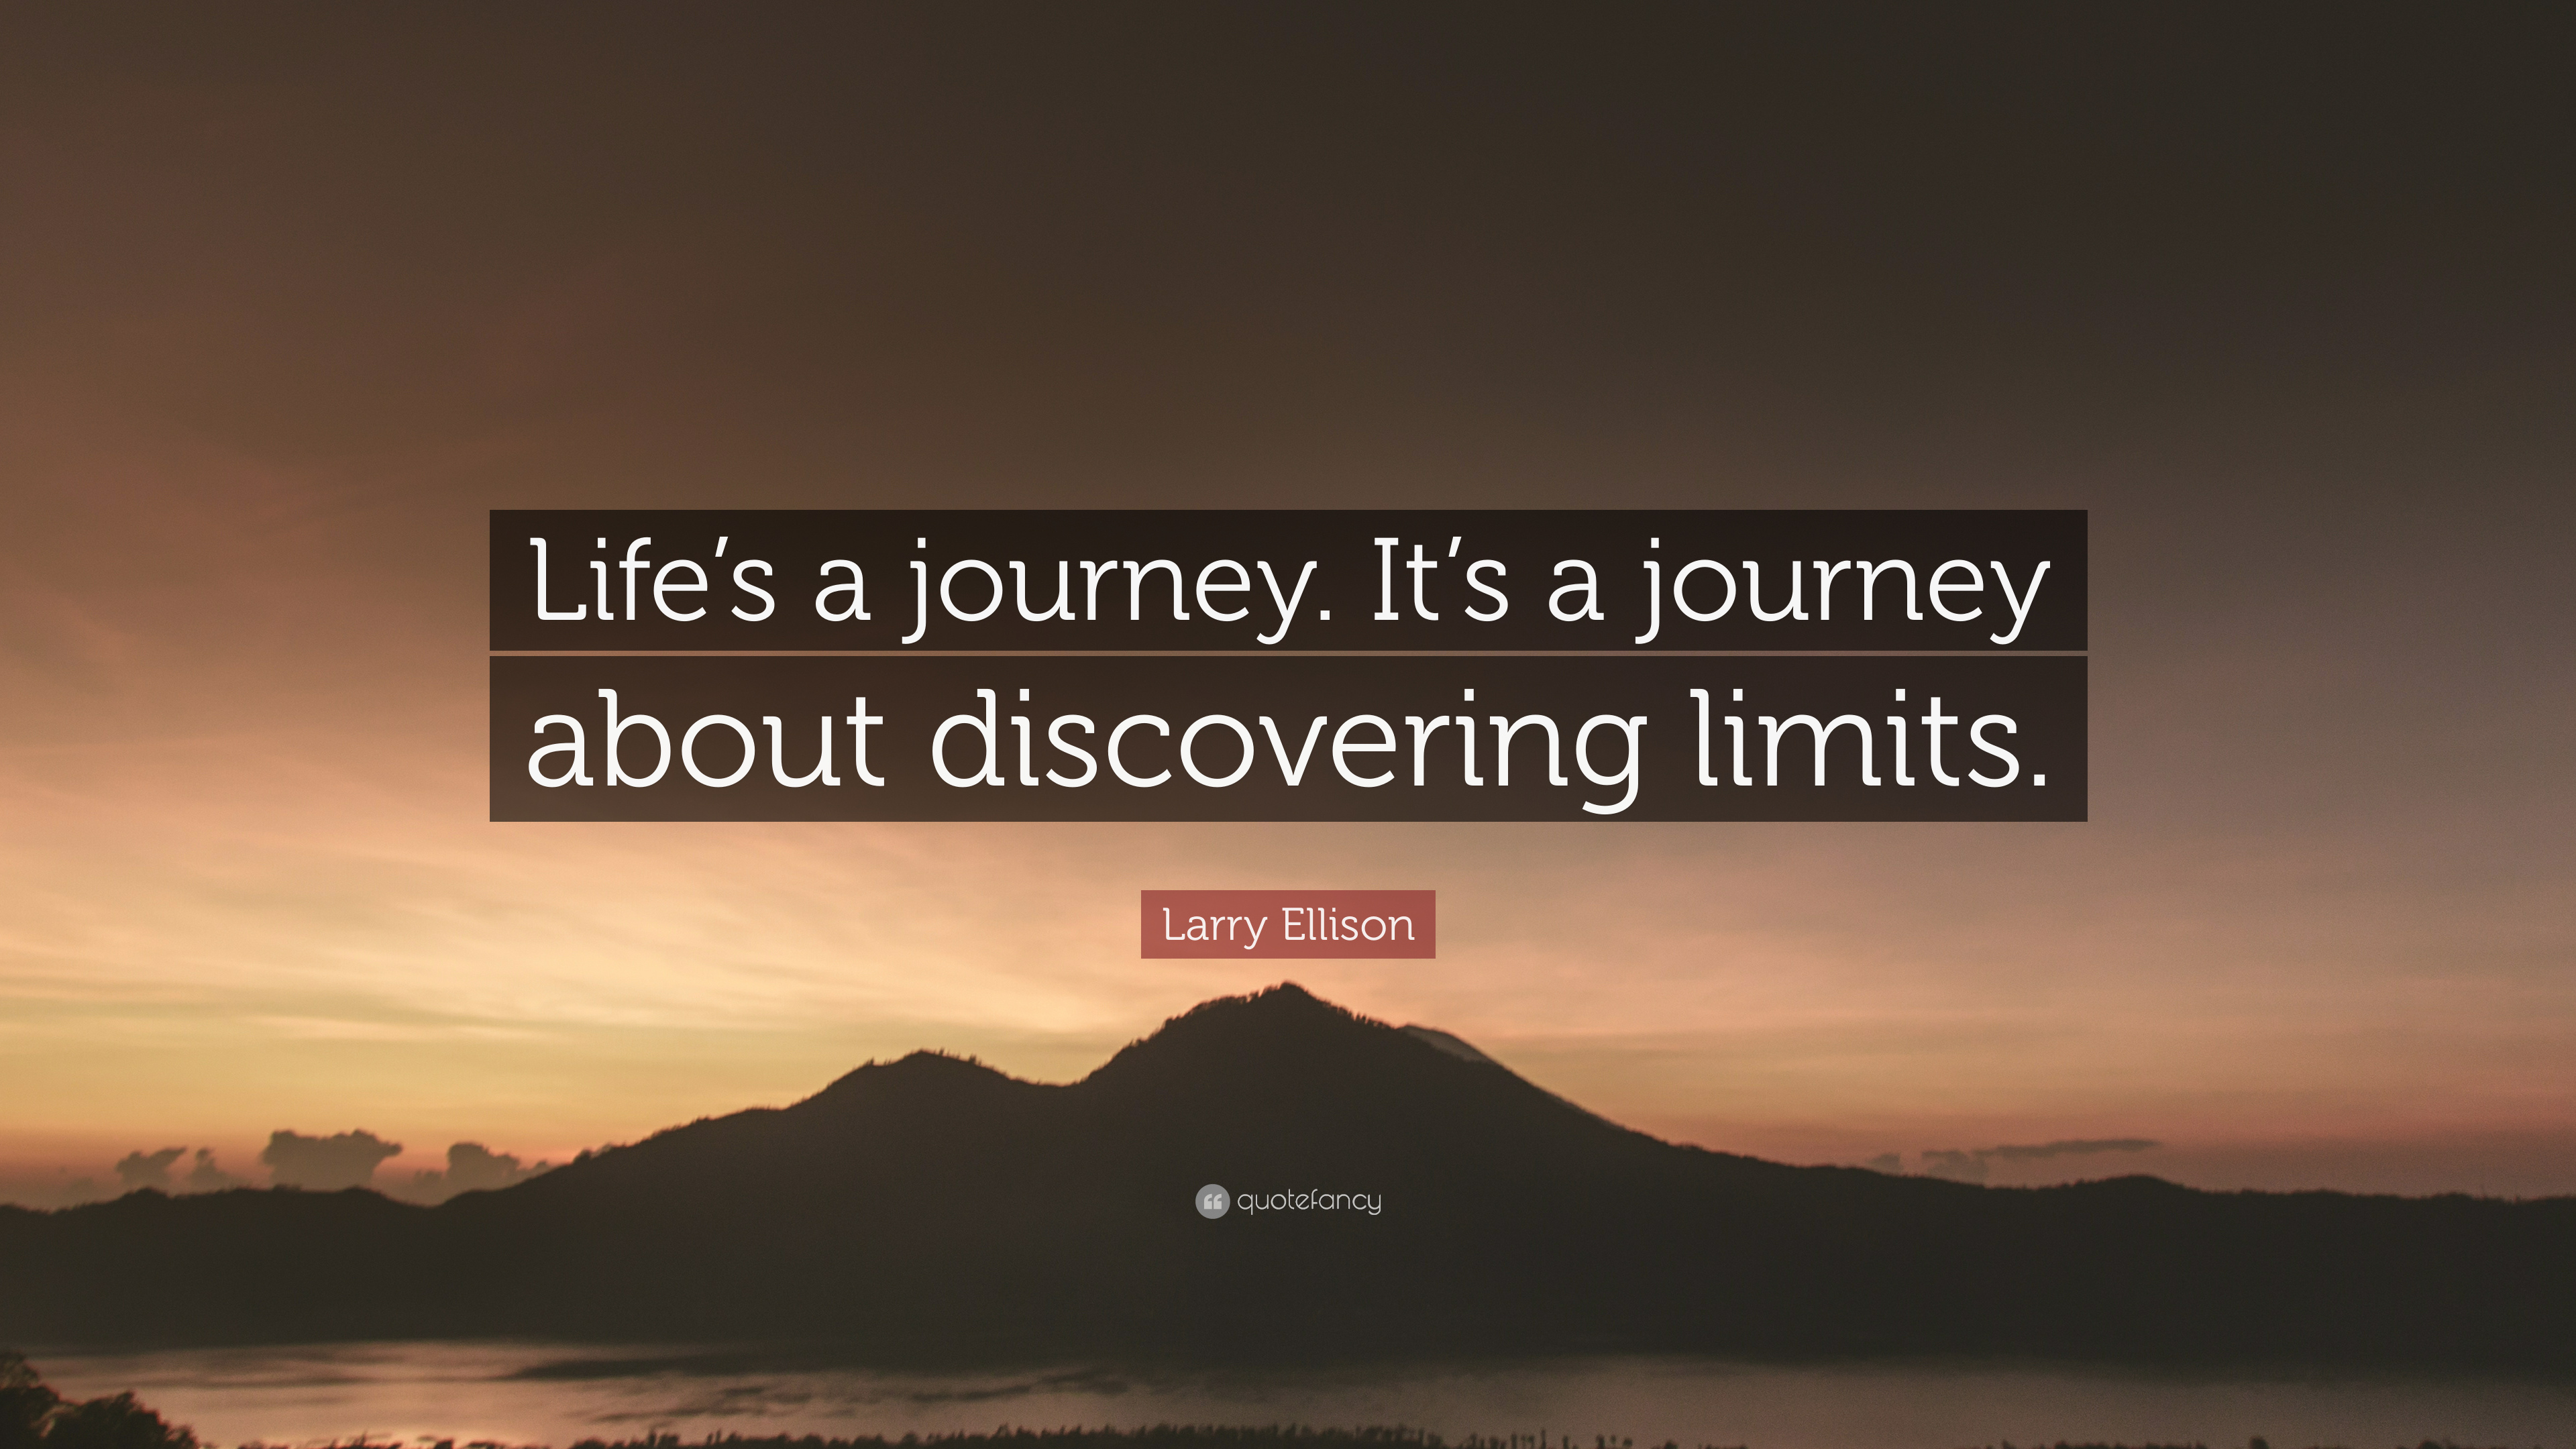 Larry Ellison Quote: “Life's a journey. It's a journey about